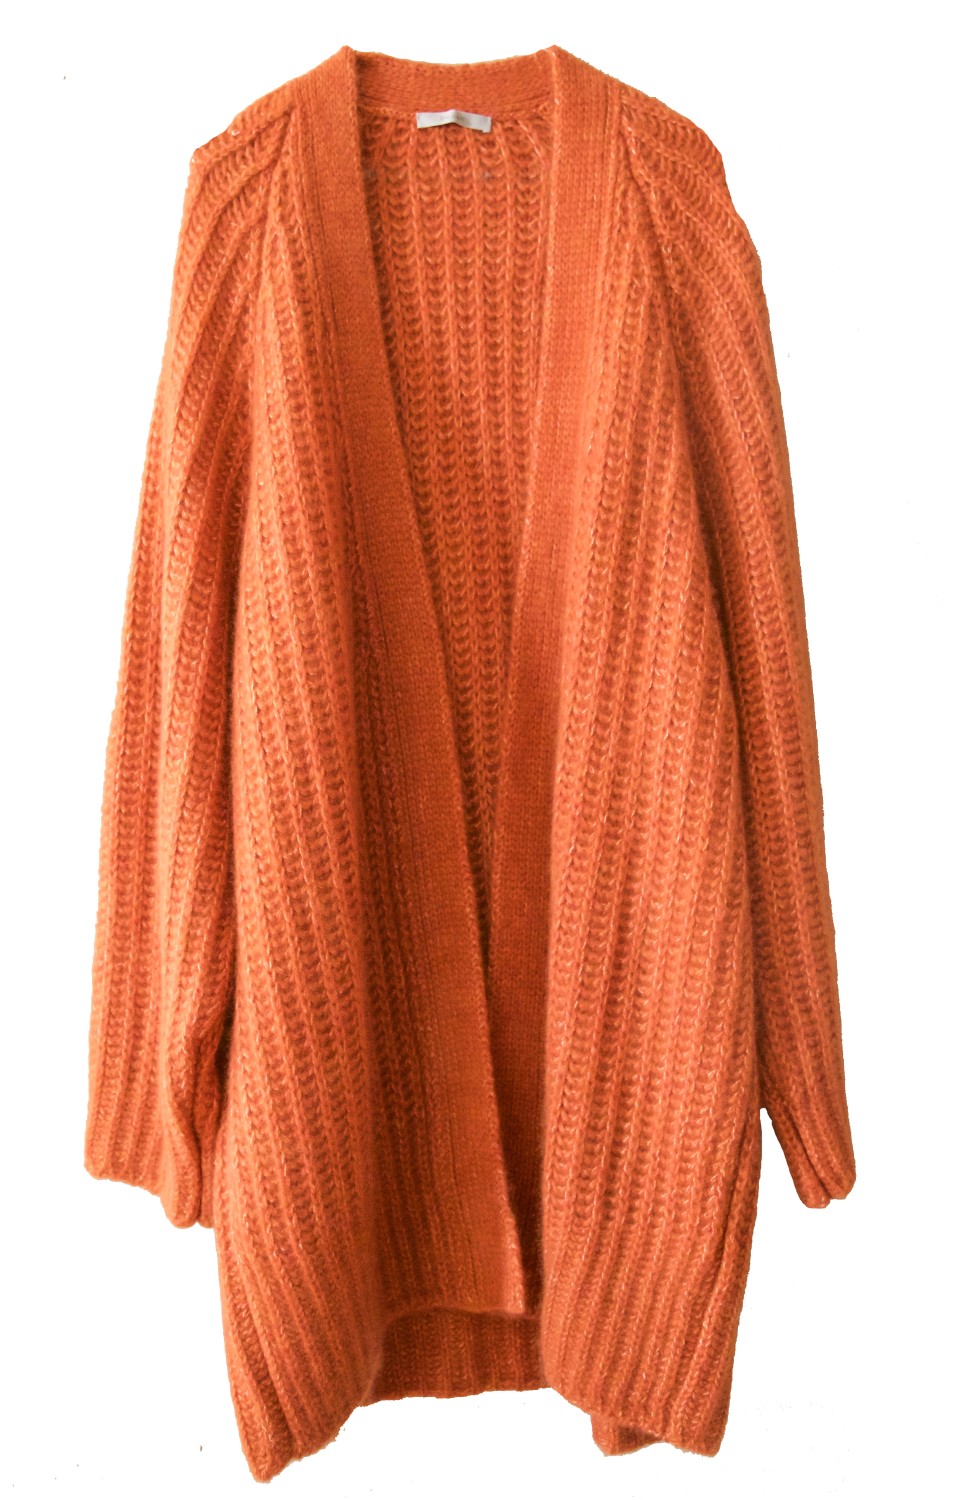 shop Dusan  Maglie: Maglie Dusan, cardigan modello oversize, maniche lunghe, senza chiusure, lunghezza al ginocchio, color arancio.

Composizione: 100% lana mohair. number 1869